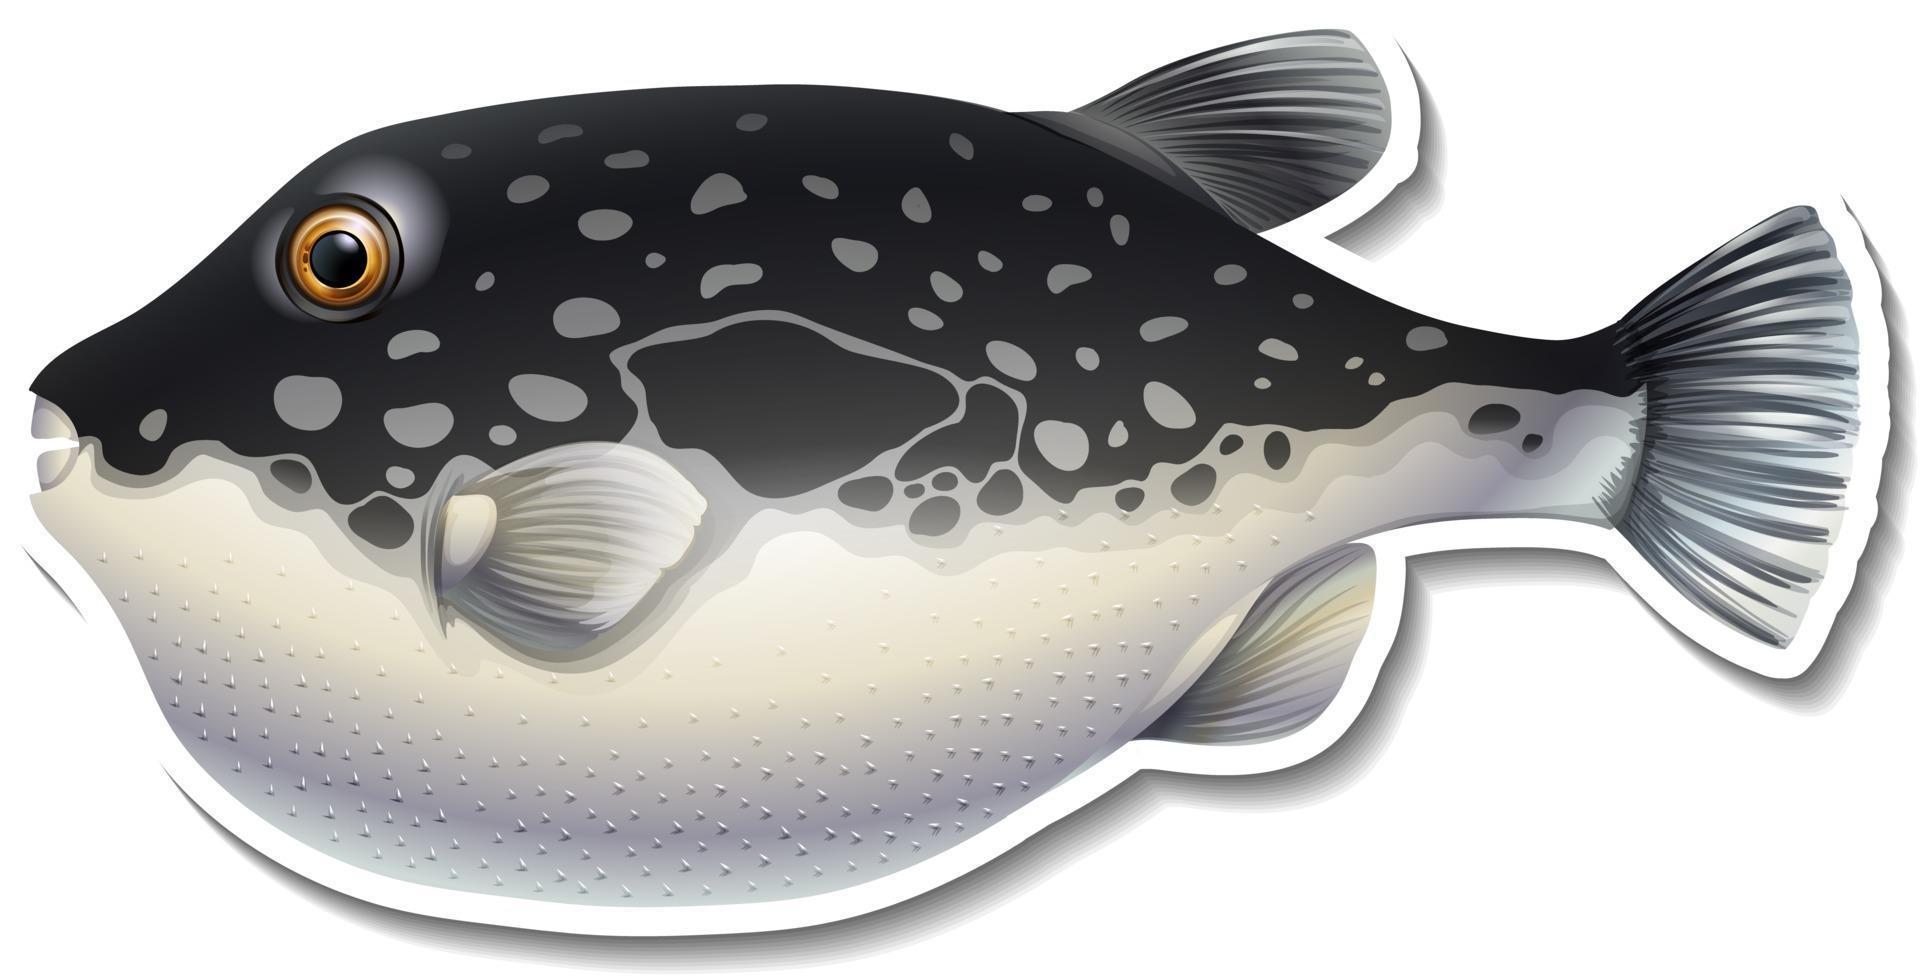 Puffer fish cartoon sticker on white background vector